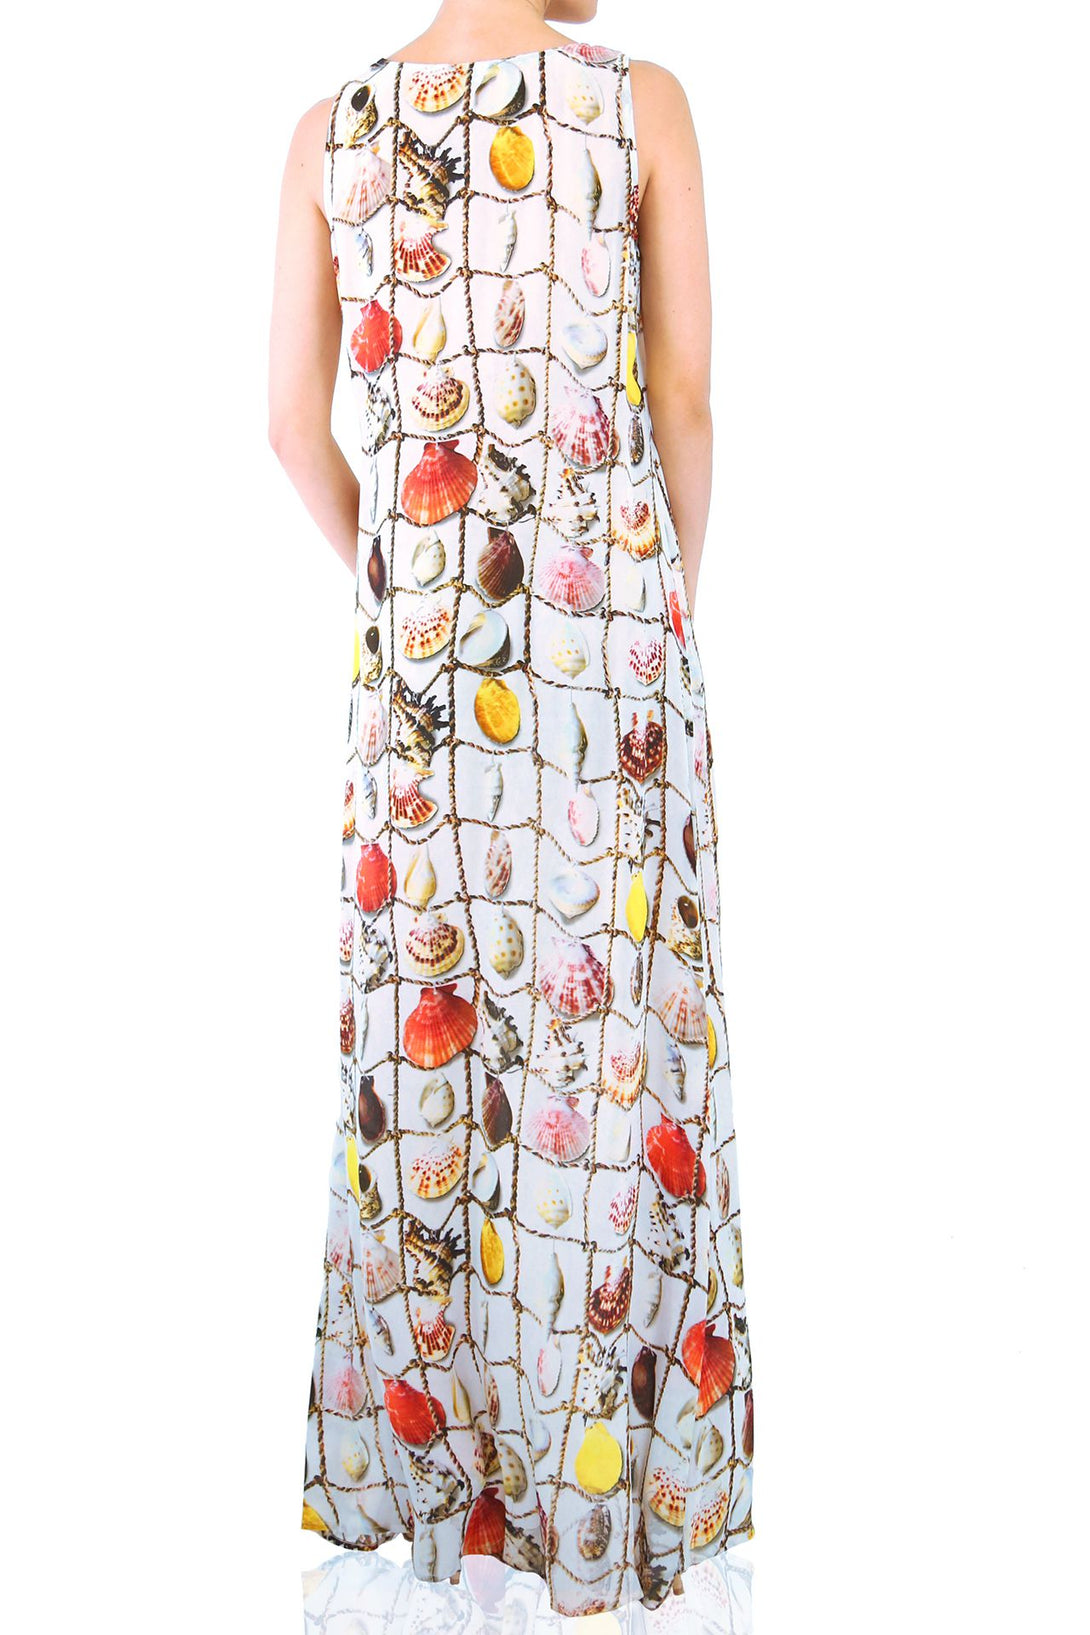 "floor length dress" "summer maxi dresses for women" "Shahida Parides" "beach maxi dress"